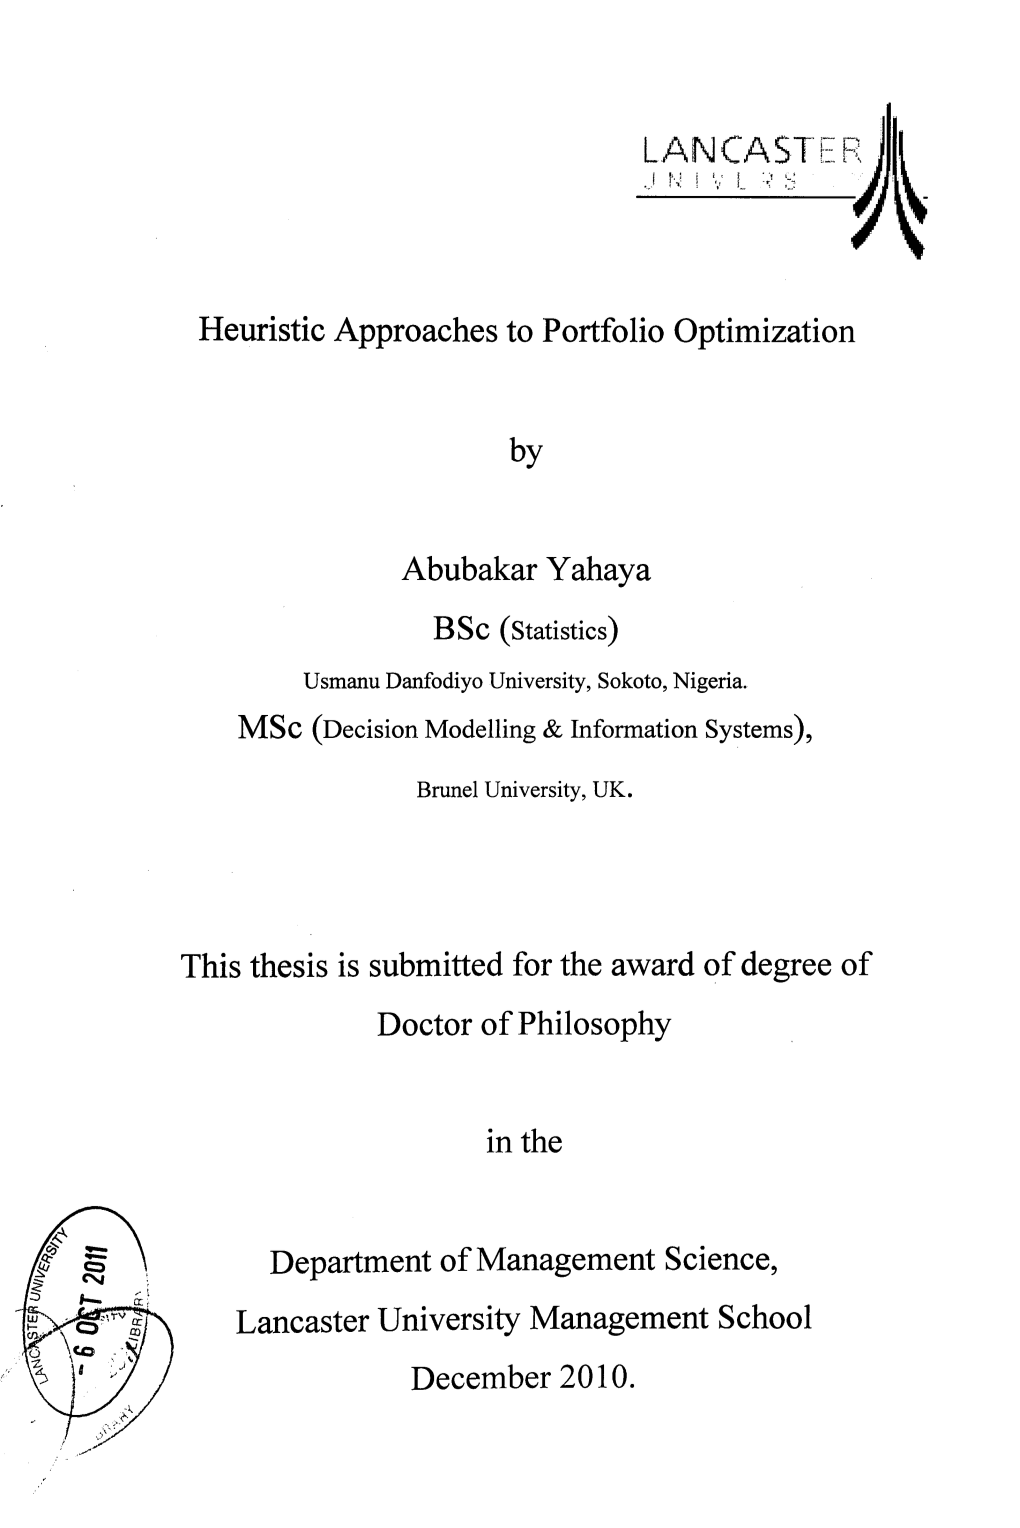 Heuristic Approaches to Portfolio Optimization by Abubakar Yahaya